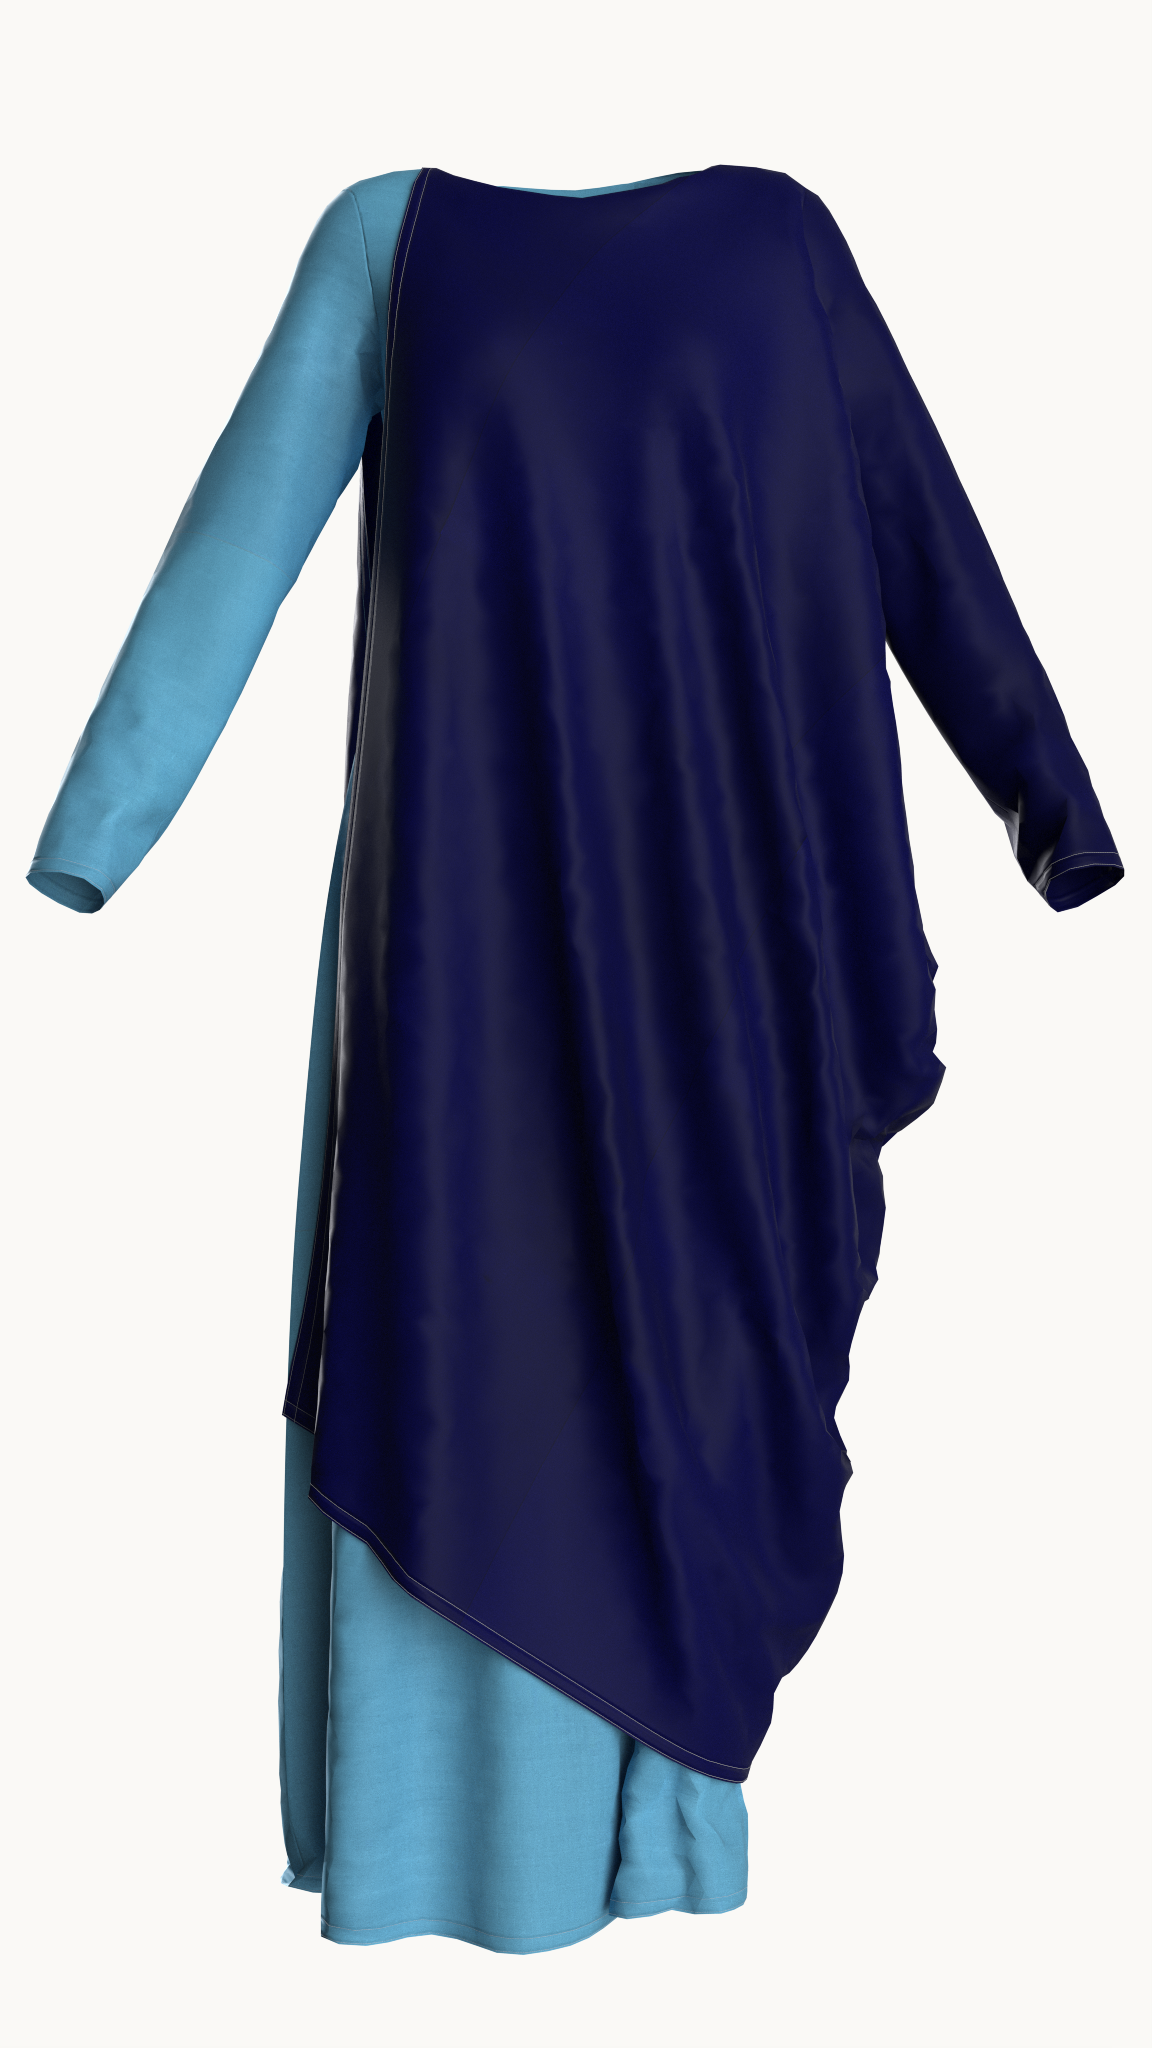 Full sleeve maxi dress  with drape design